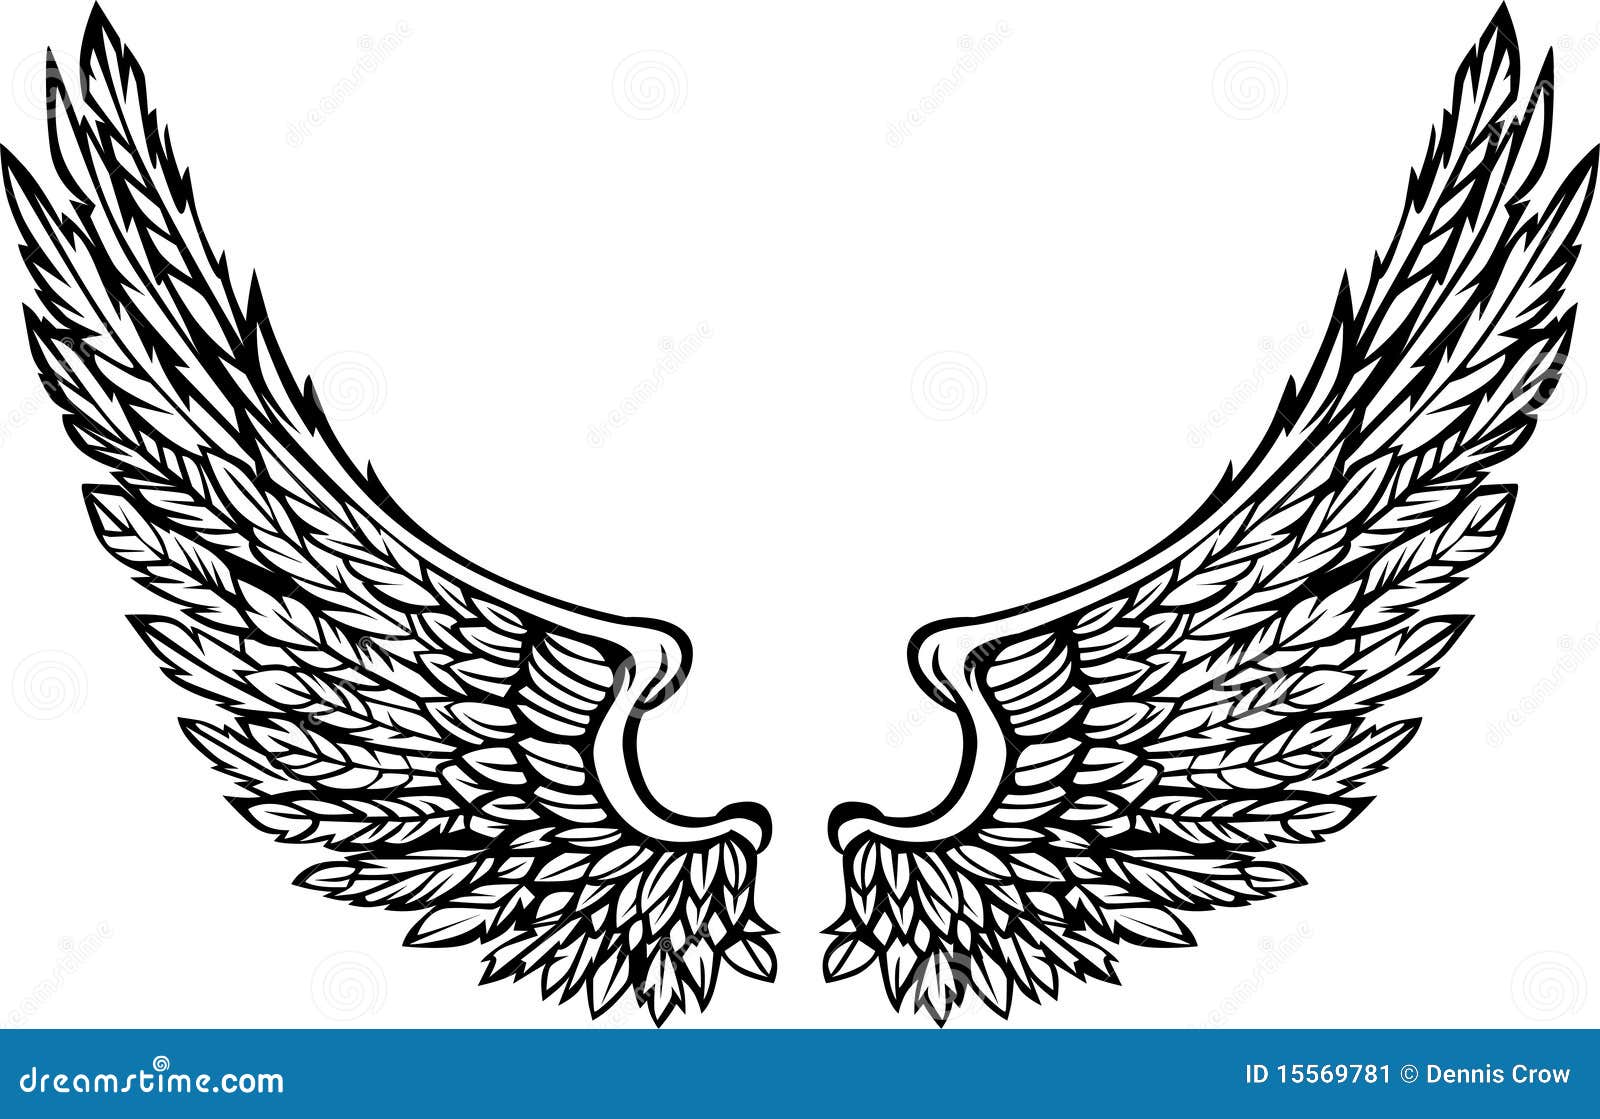 clip art eagle wings - photo #4